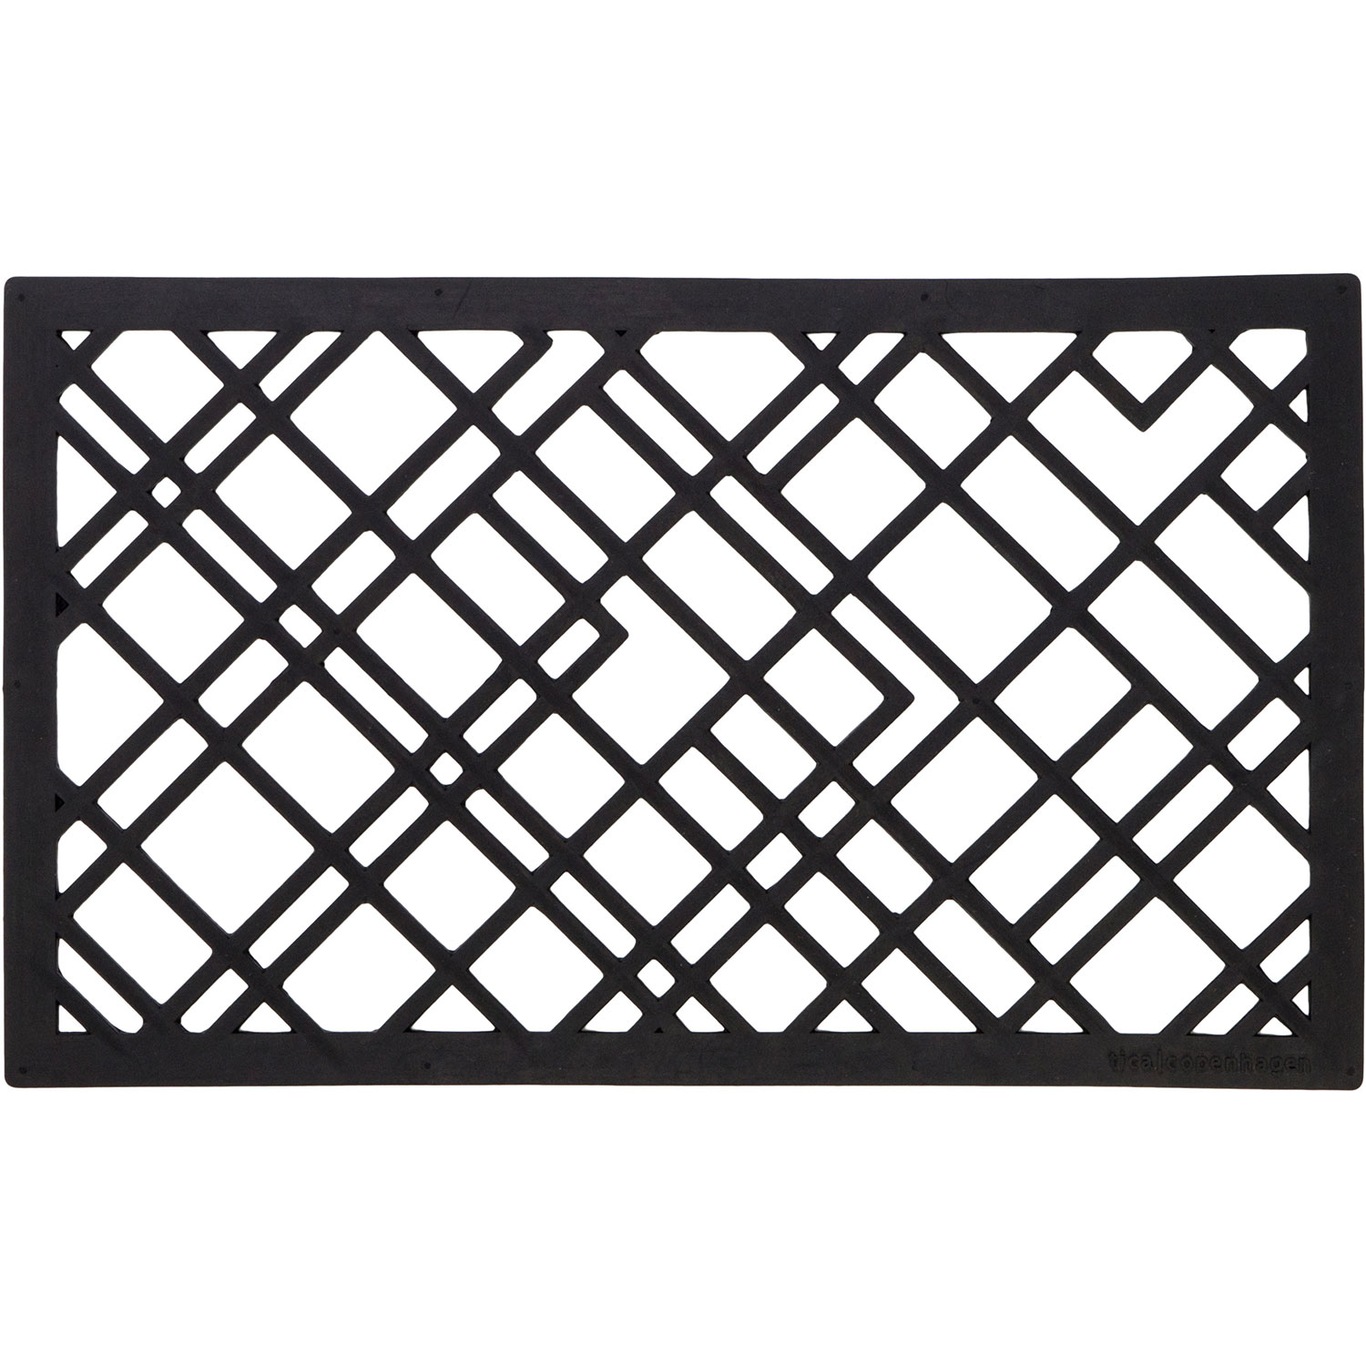 https://royaldesign.com/image/2/tica-copenhagen-lines-doormat-black-0?w=800&quality=80